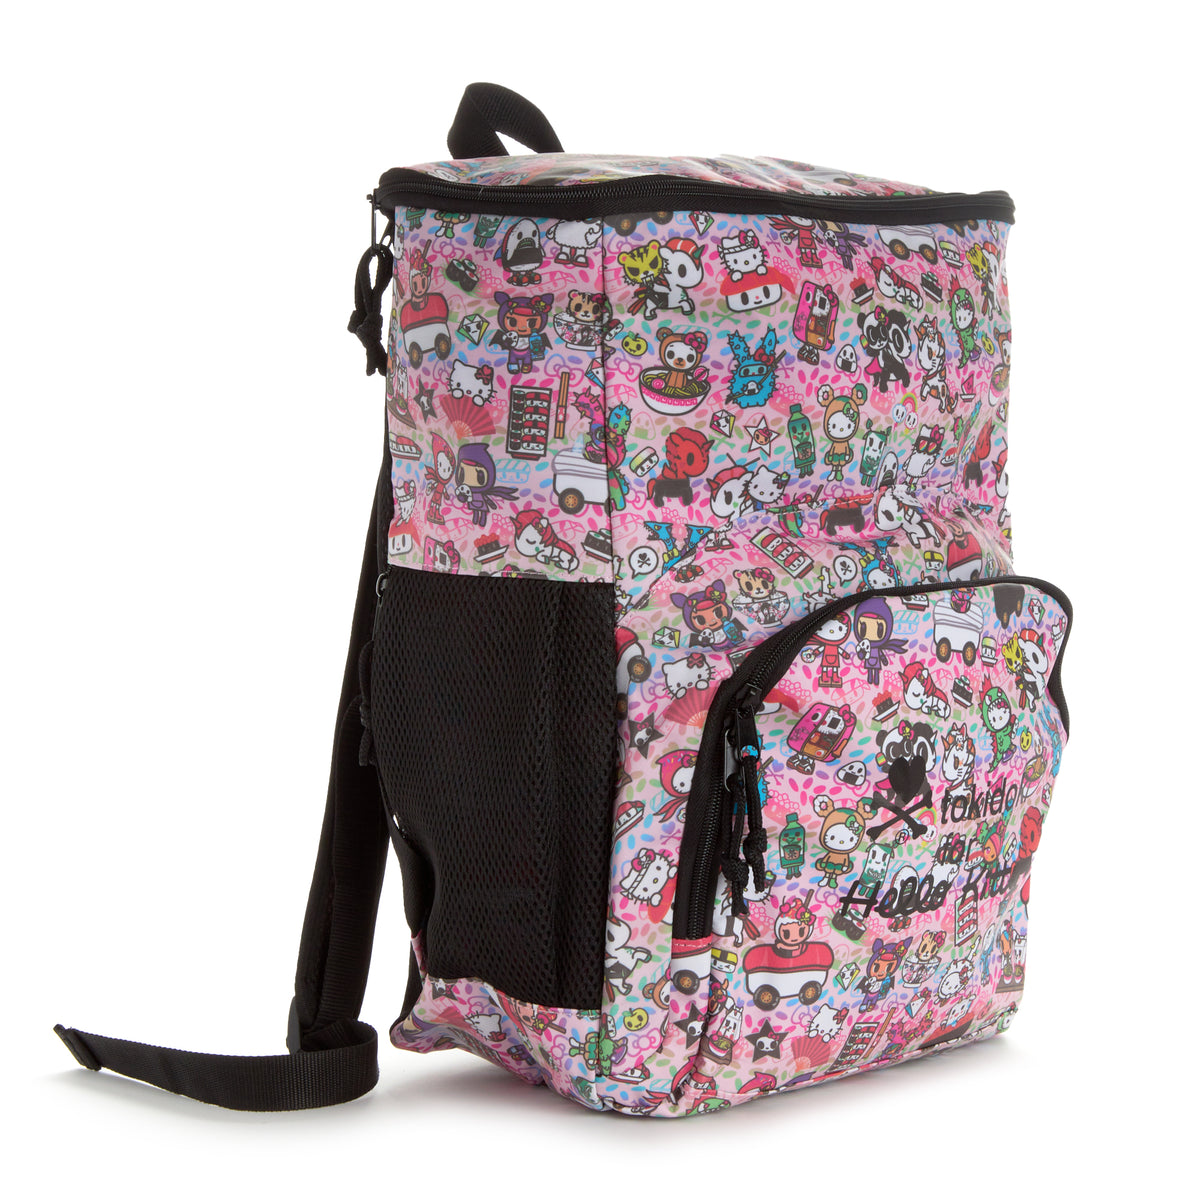 Tokidoki x Hello Kitty Oishii Adventure Backpack Bags NAKAJIMA CORPORATION   